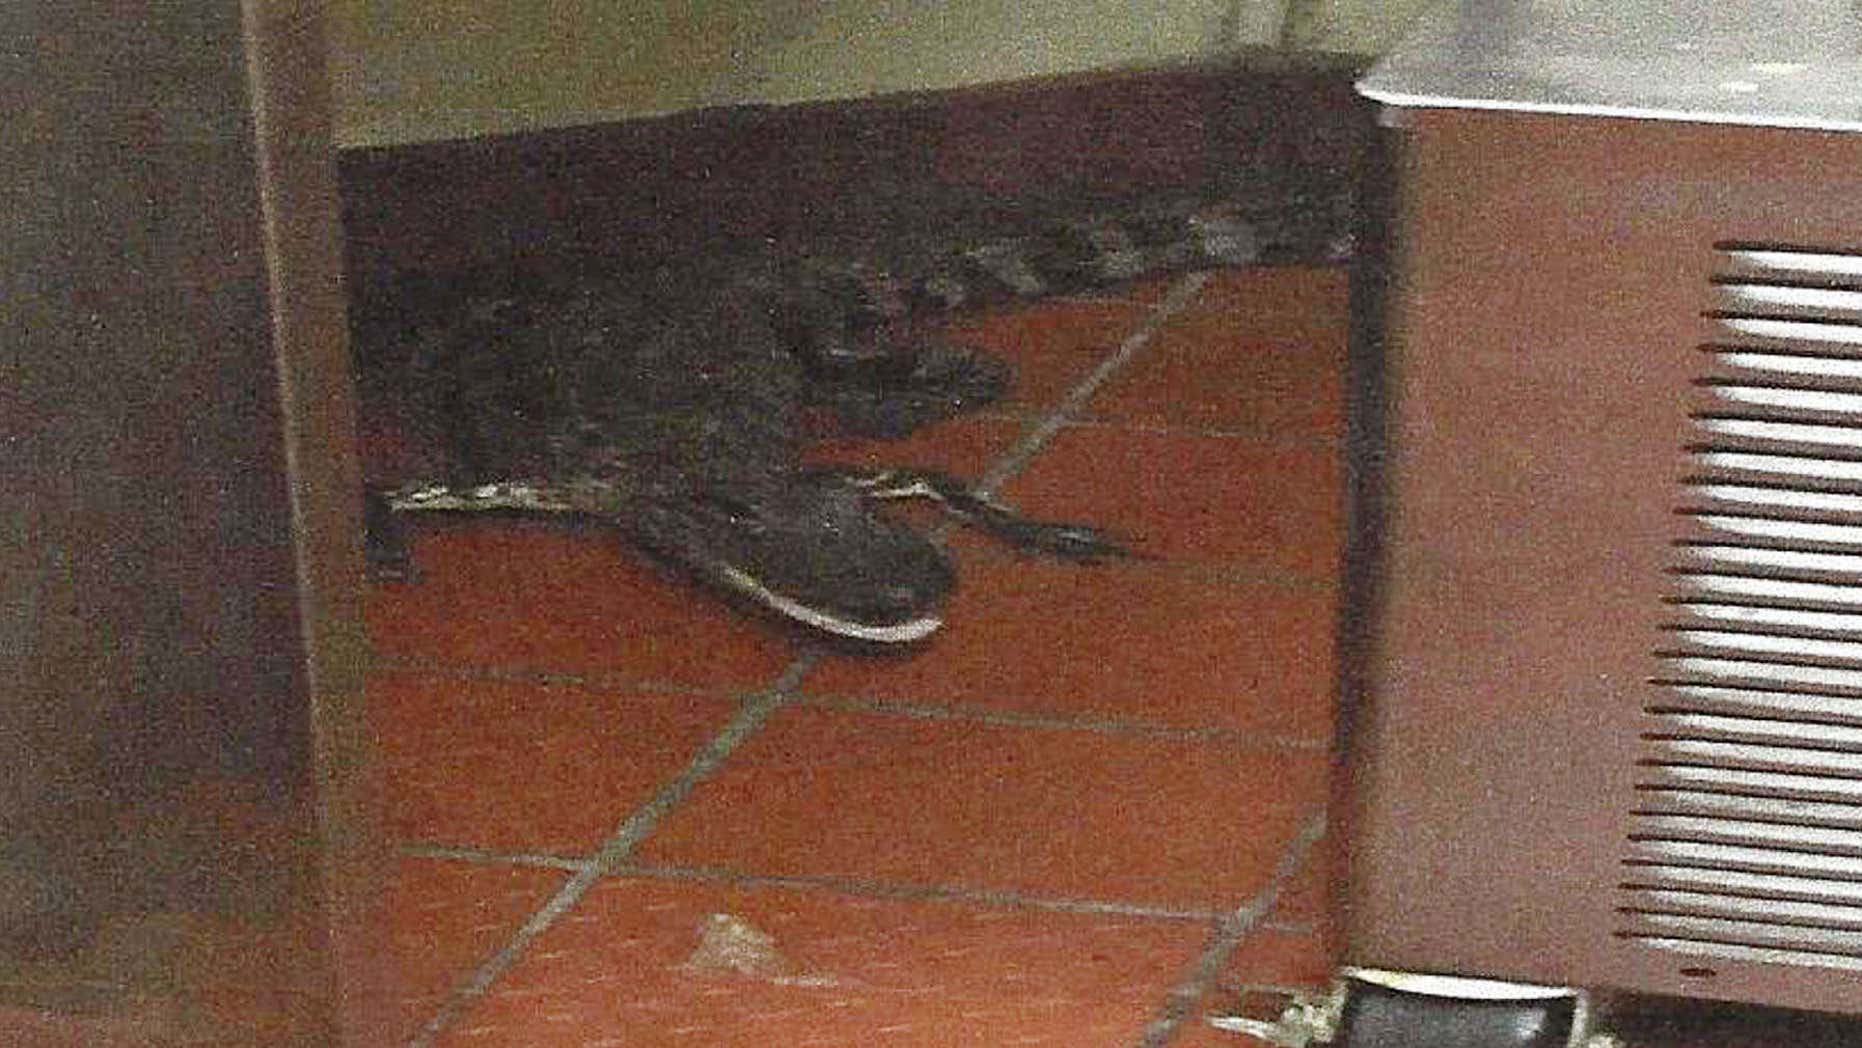 Thrown Alligator: Florida man arrested for hurling reptilian through drive-thru window